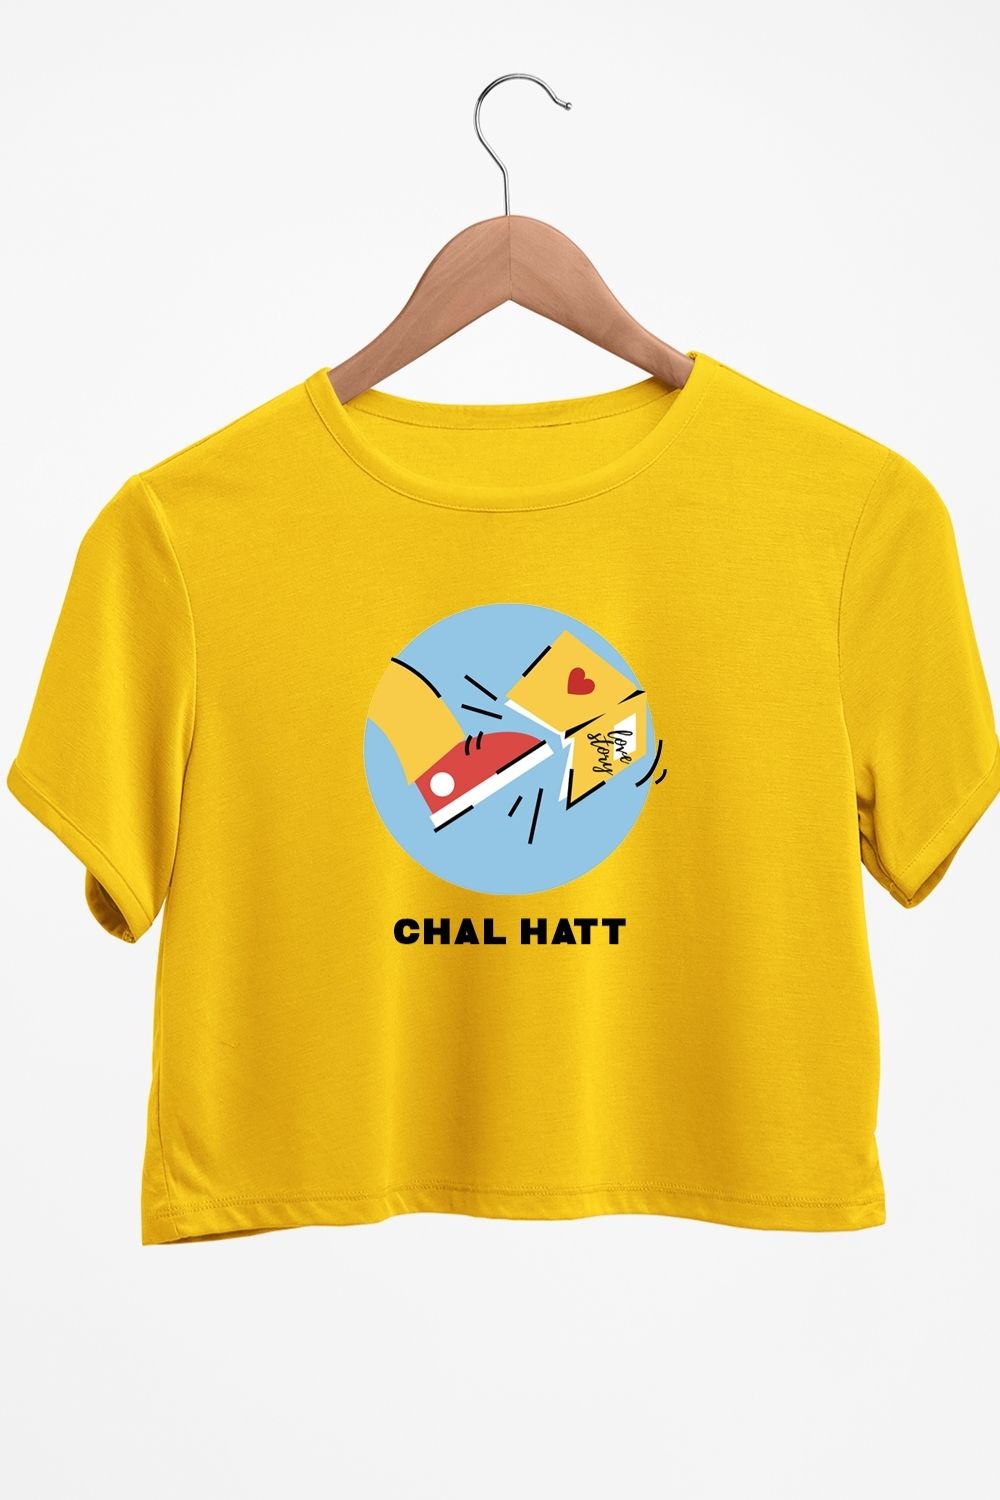 Chal Hatt Graphic Printed Yellow Crop Top